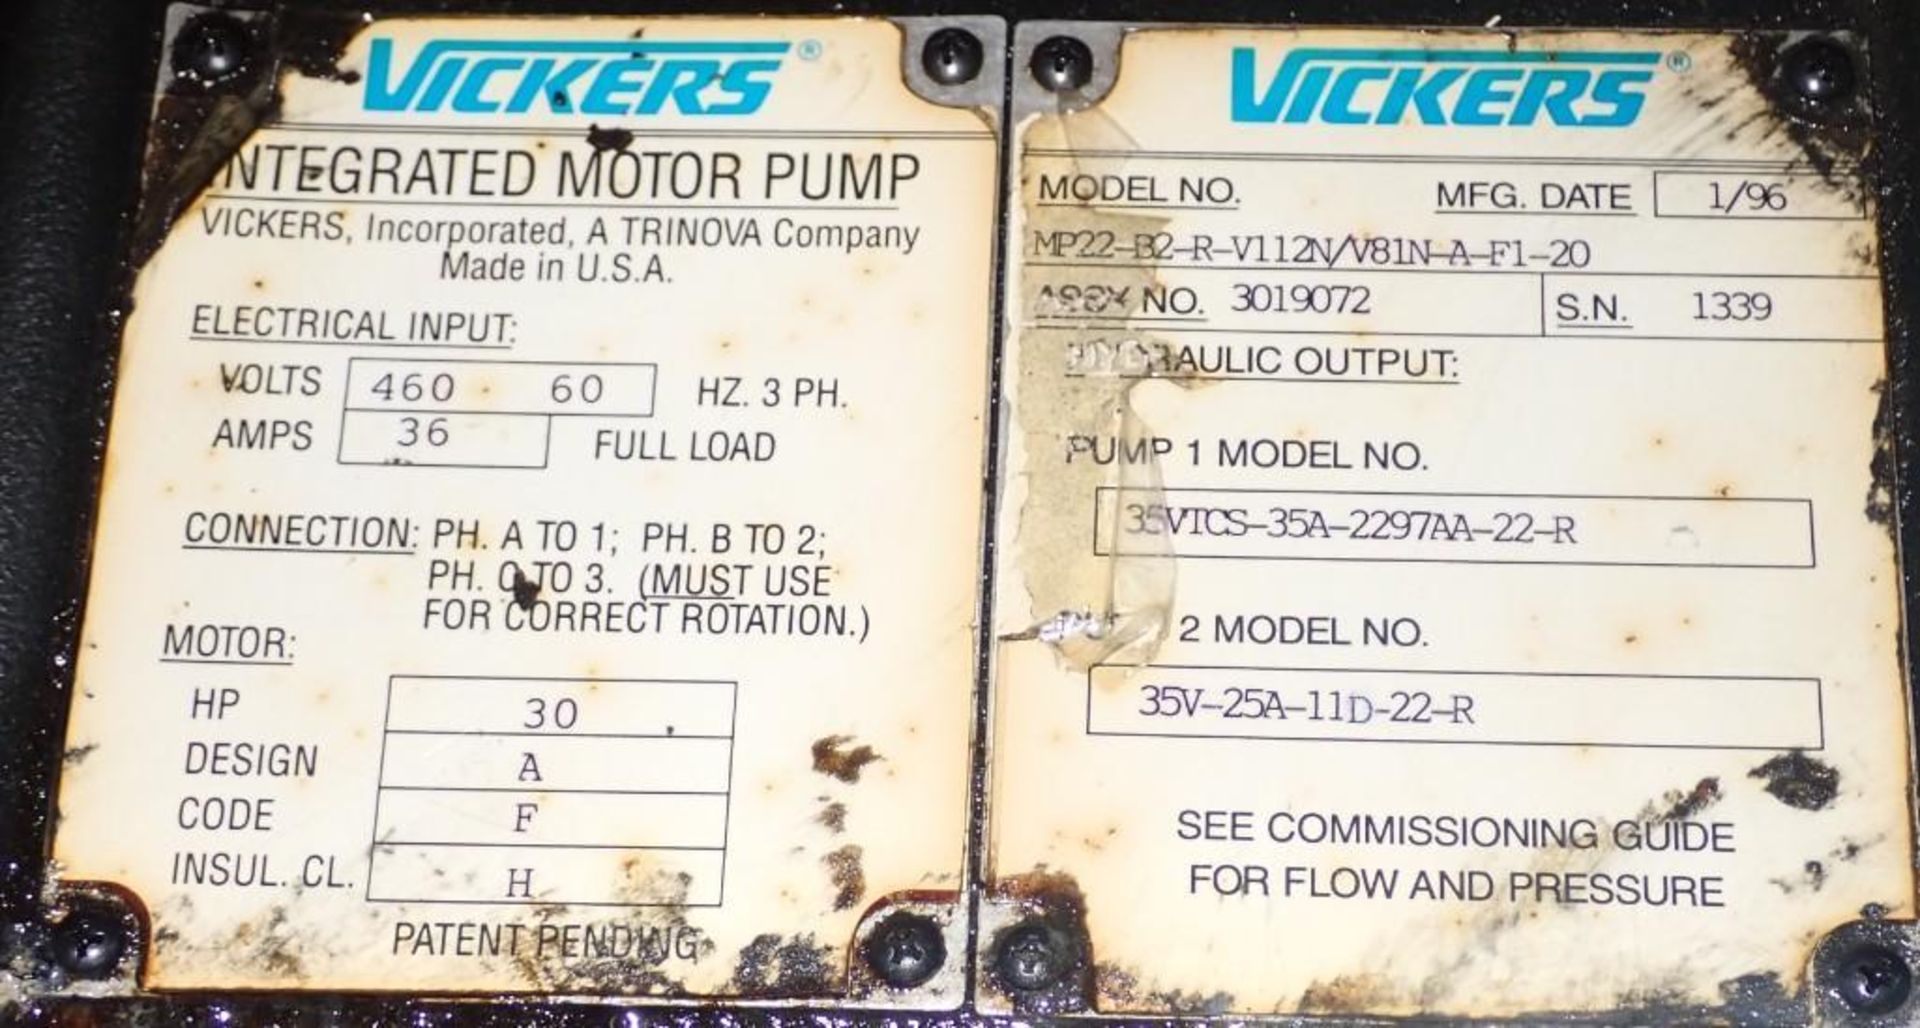 Vickers Integrated Motor Pump #MP22-B2-R-V112N - Image 4 of 4